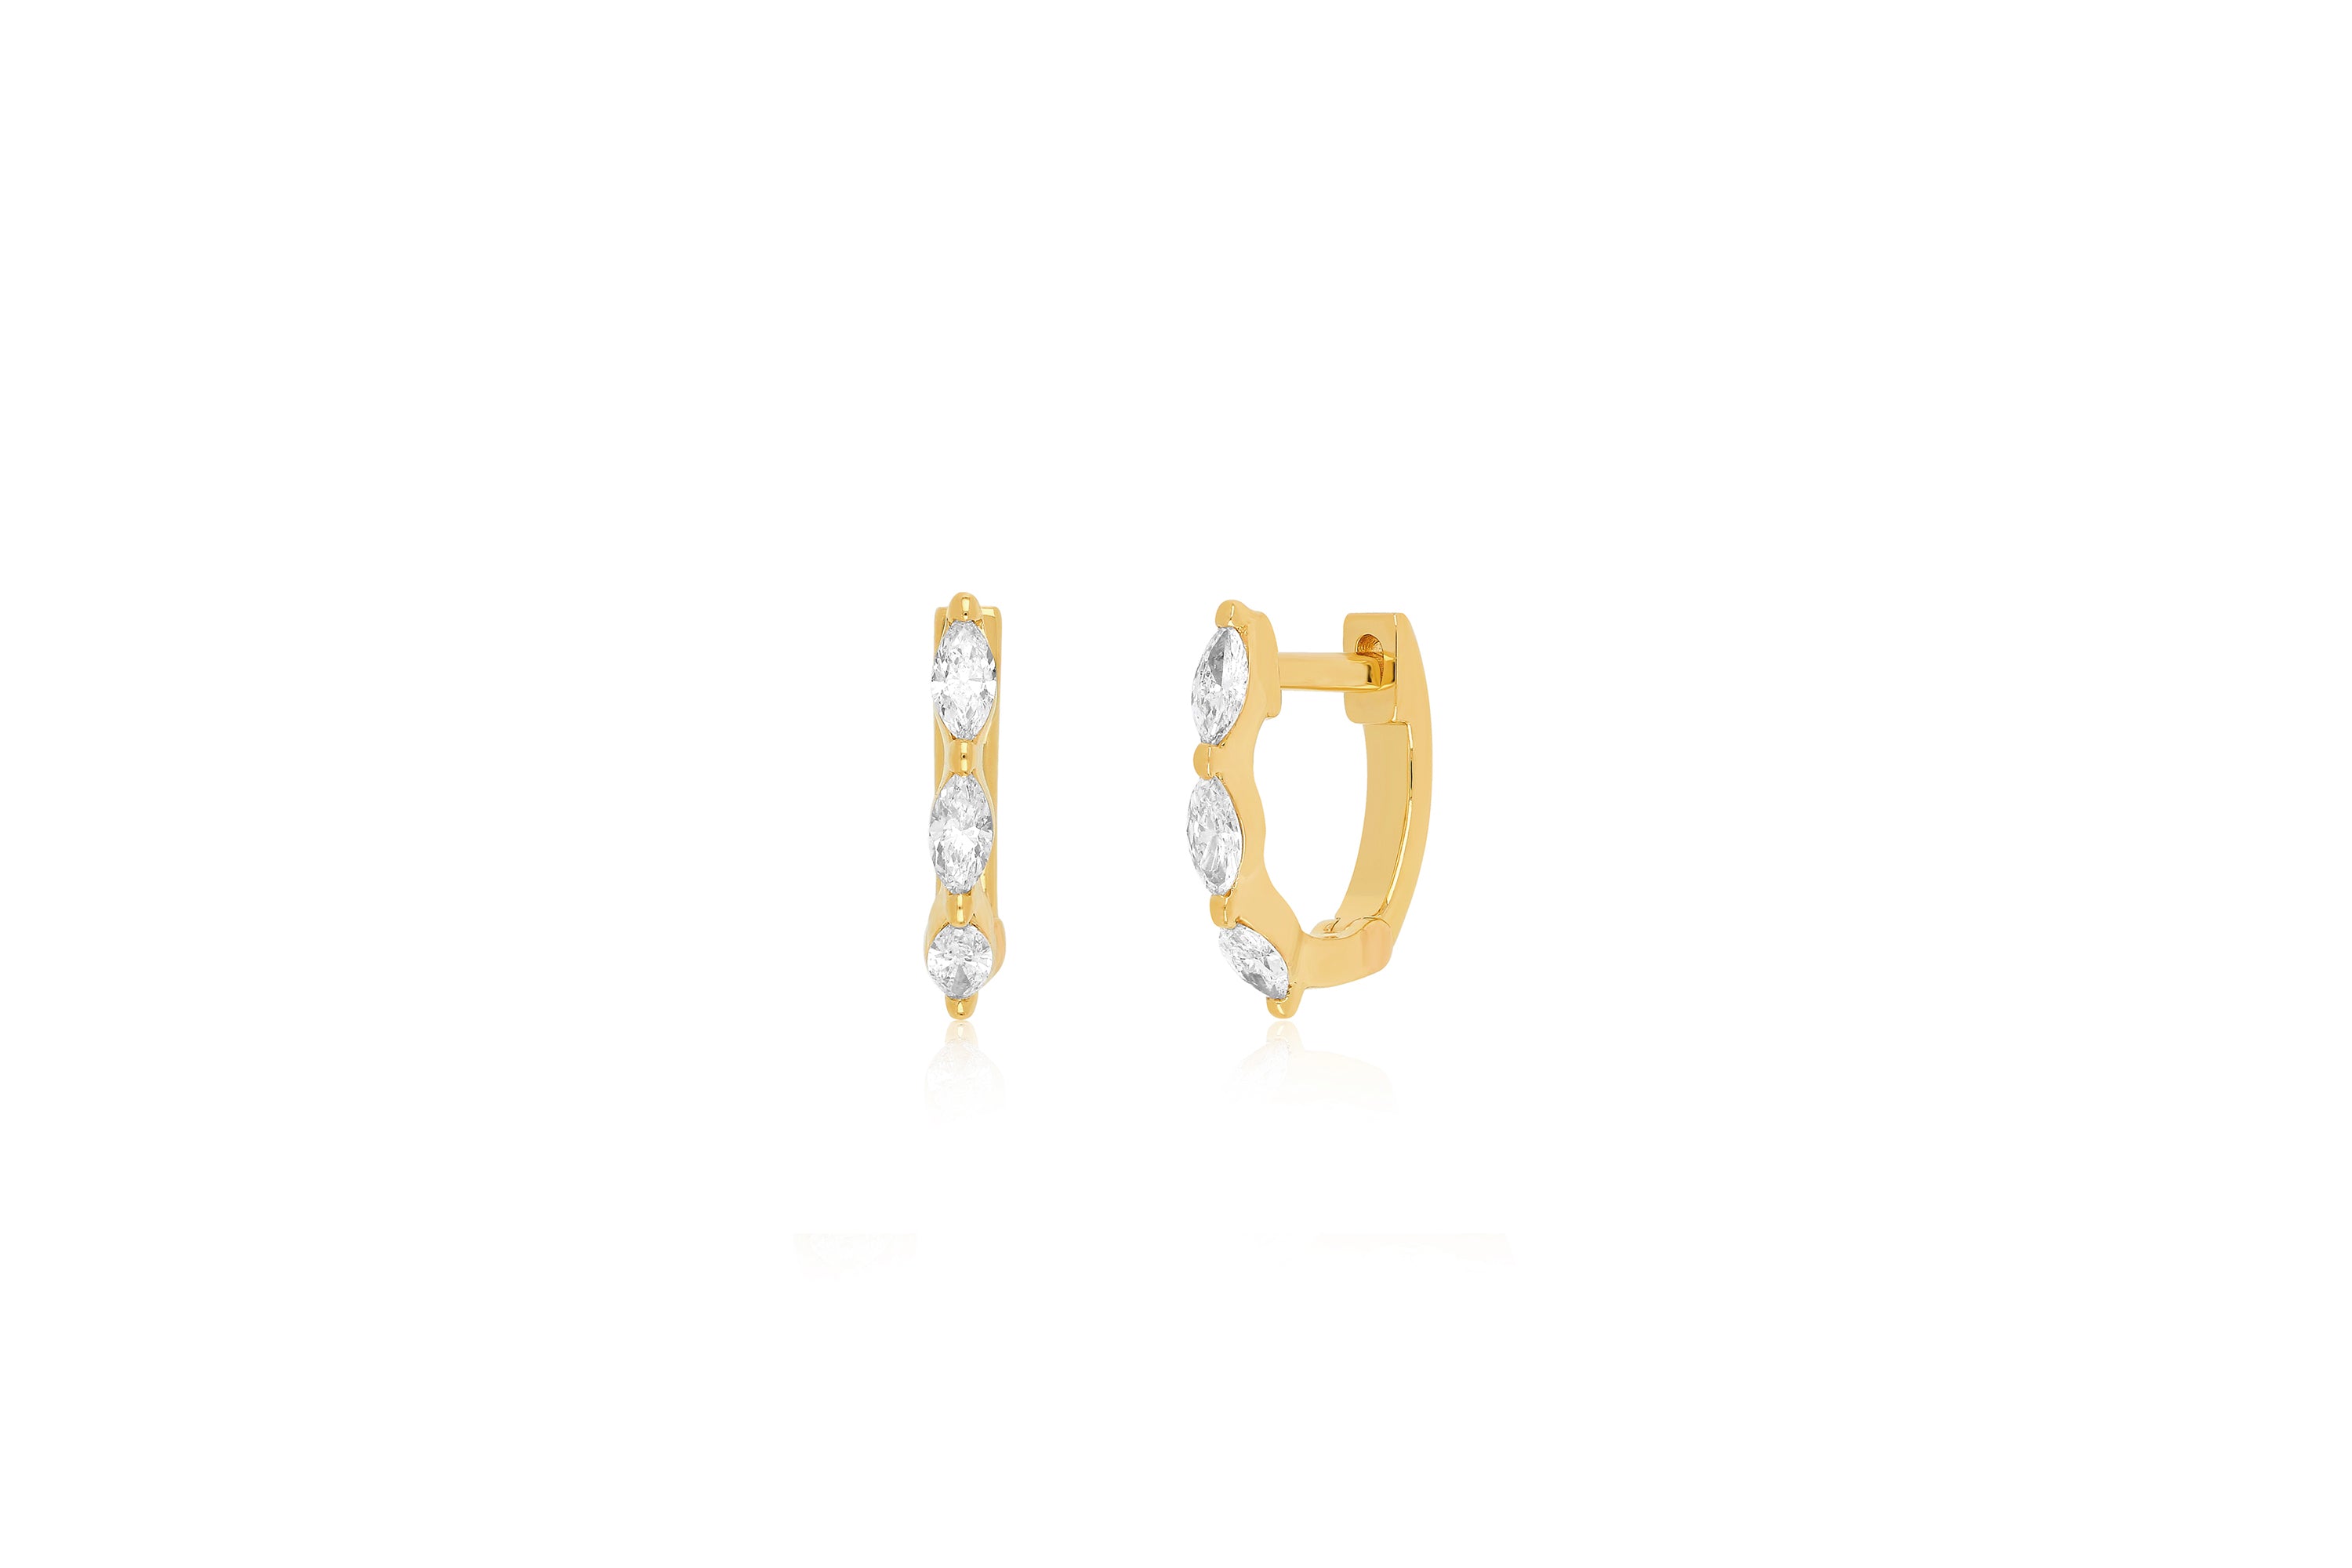 14k (karat) yellow gold mini huggie with 6 marquise diamonds (3 on each huggie) at 0.19 carats.